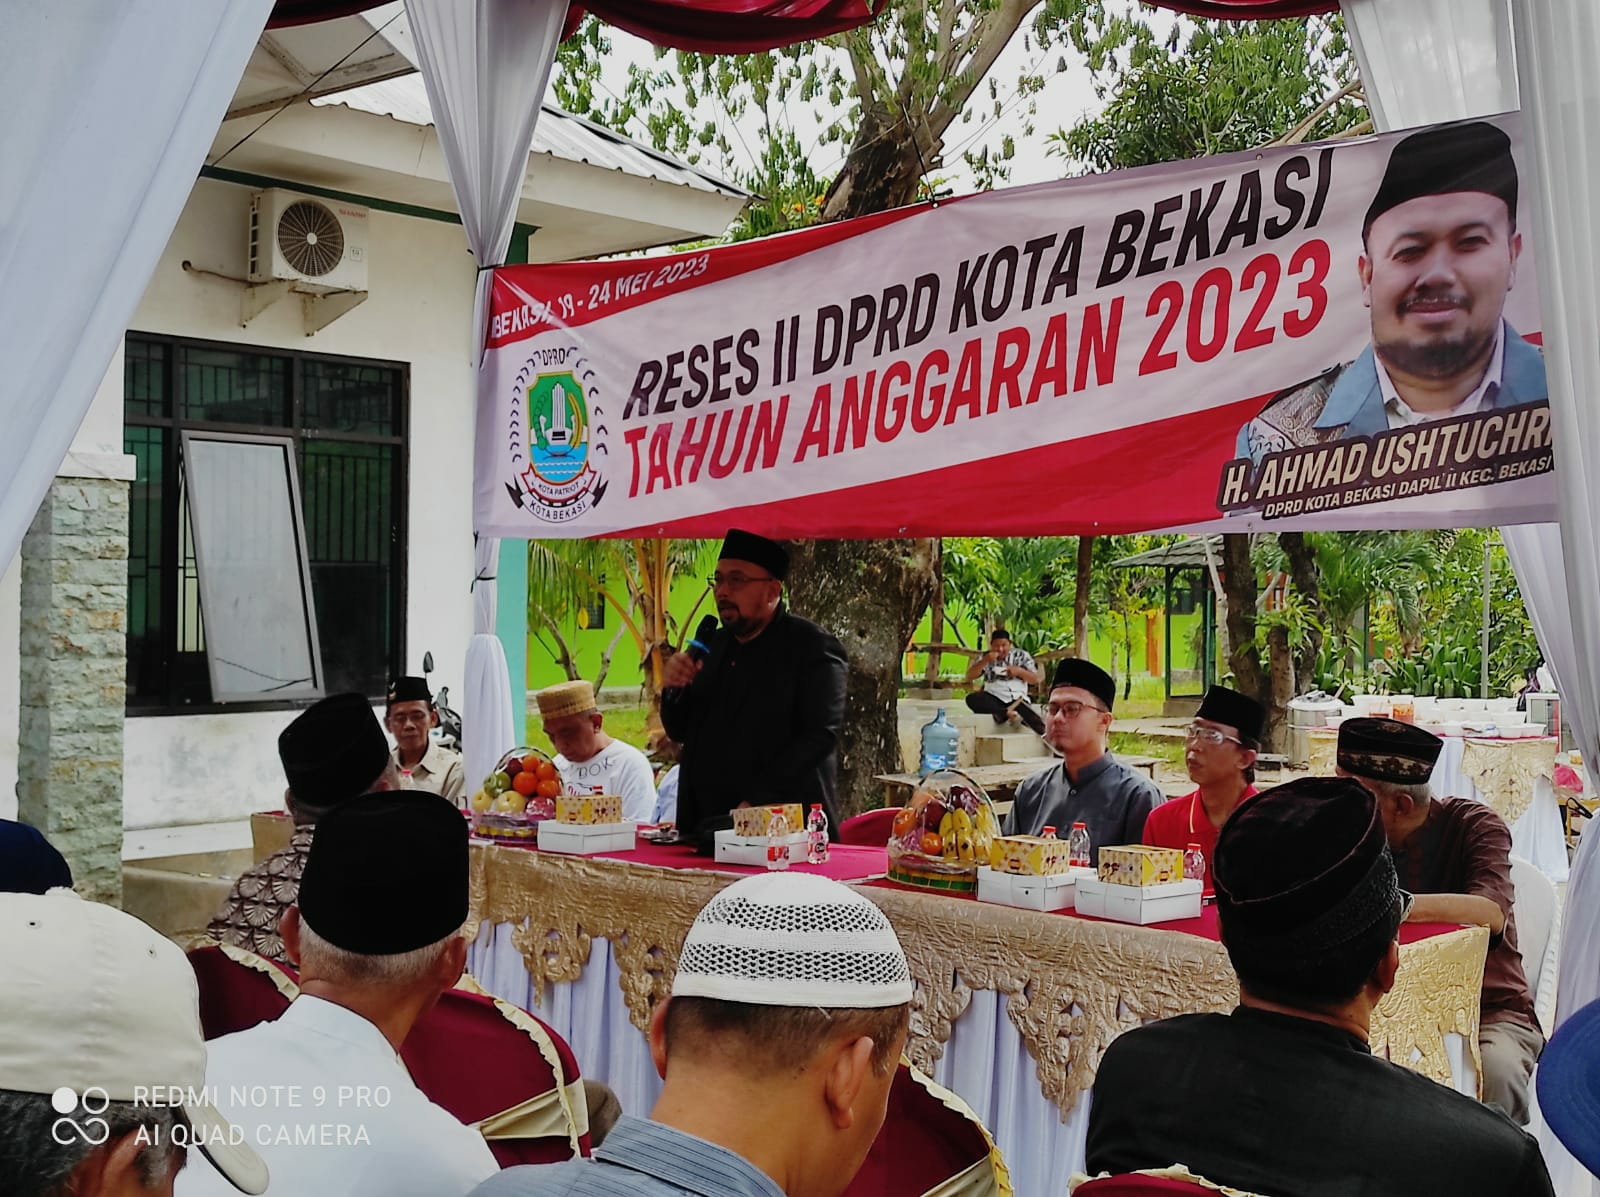 Anggota DPRD Kota Bekasi Ahmad Ushtuchri 1